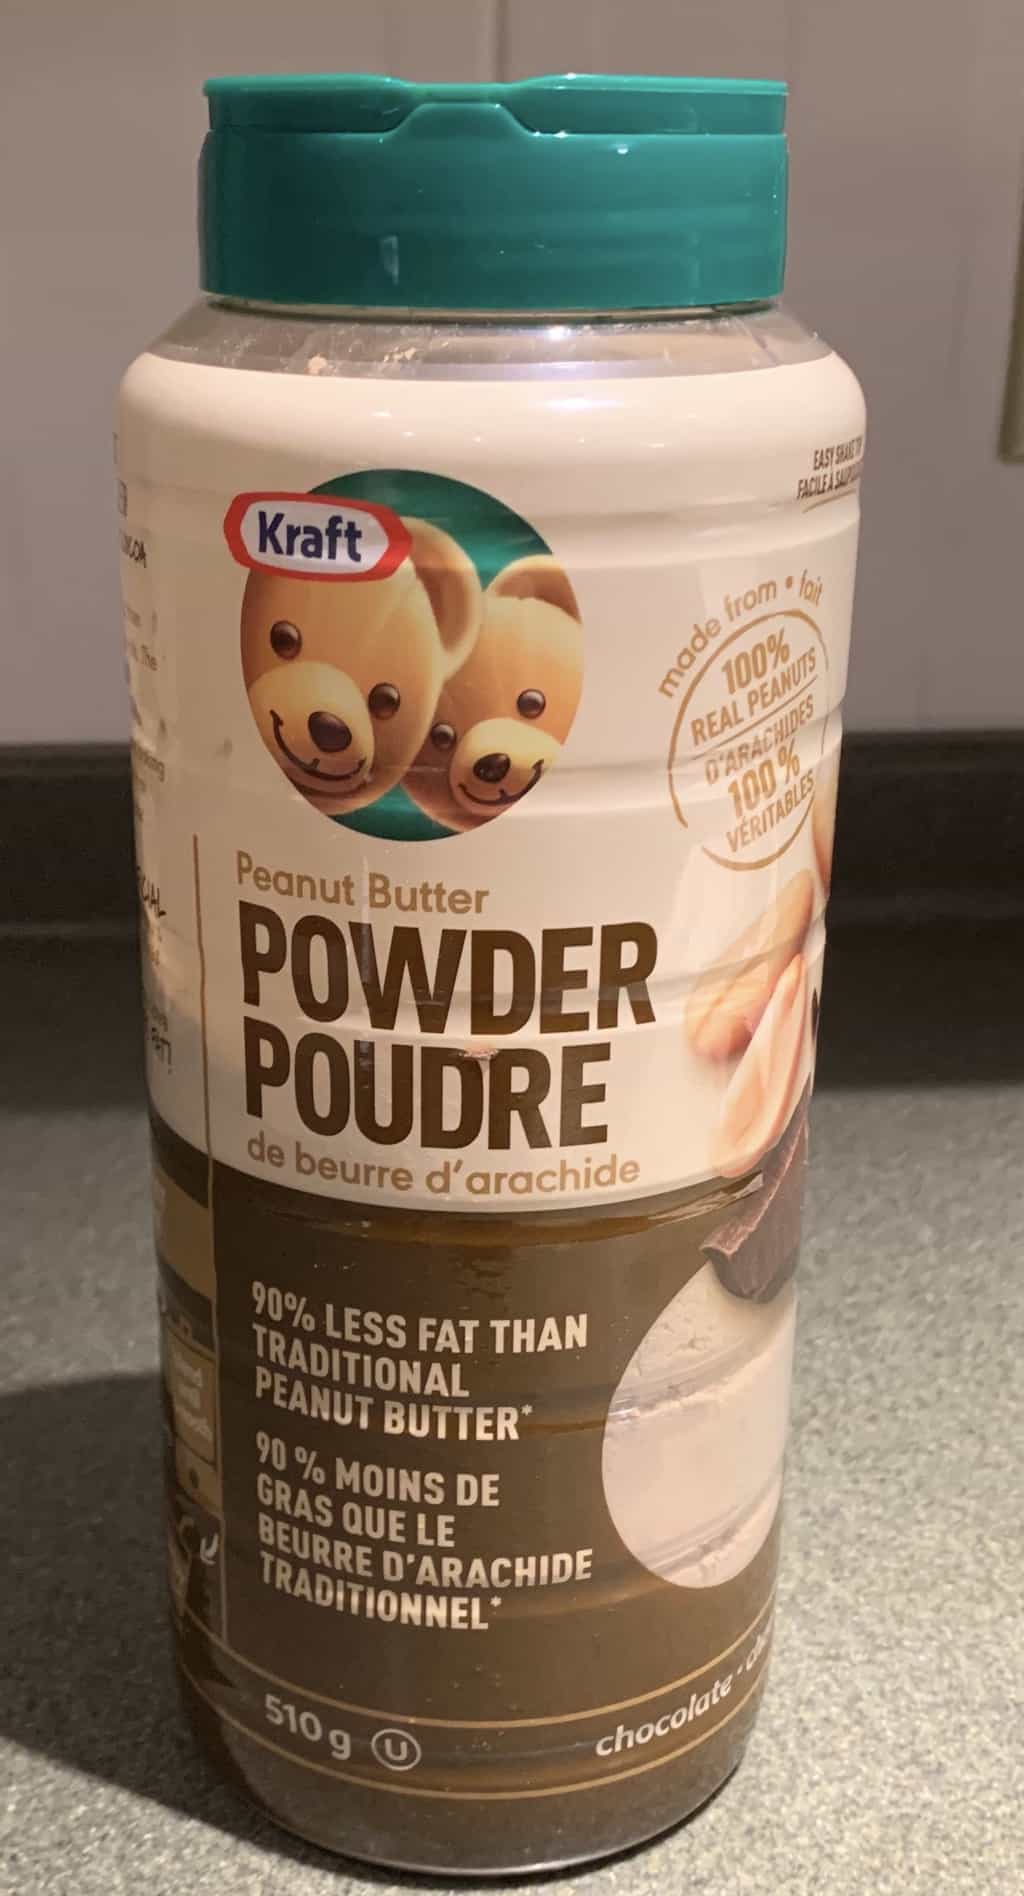 Costco Kraft Chocolate Peanut Butter Powder Review - Costcuisine